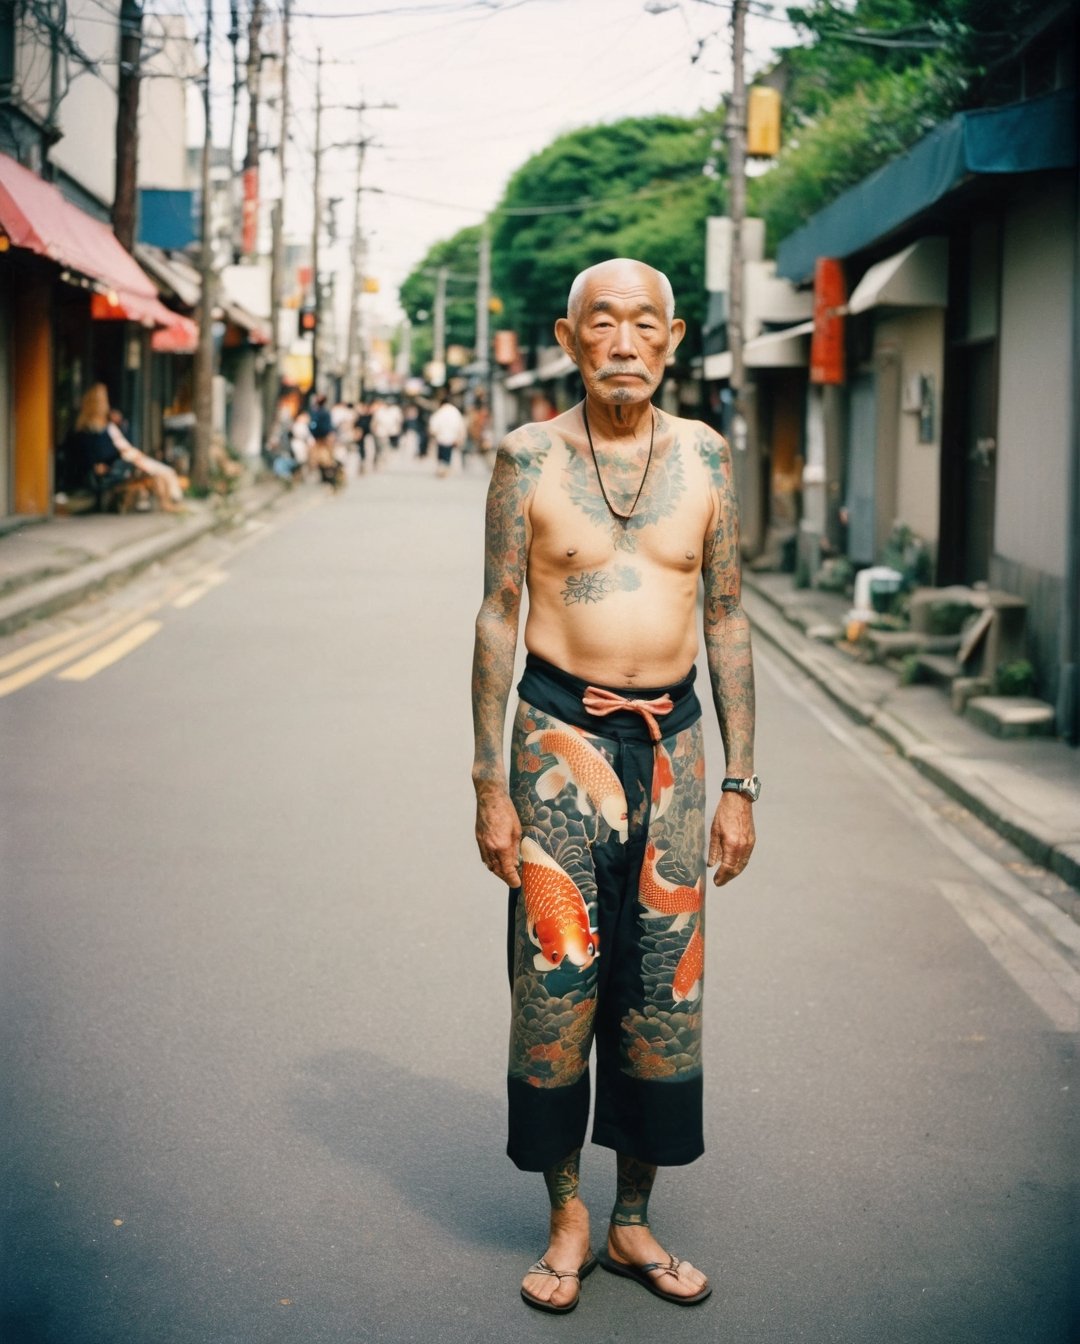 Instagram street-style photo of an old yakusa Japanese bored man, only 1 arm fully tattooed with koi fish, shot on Kodak Ektar 100, soft lense, mid-full length,analog